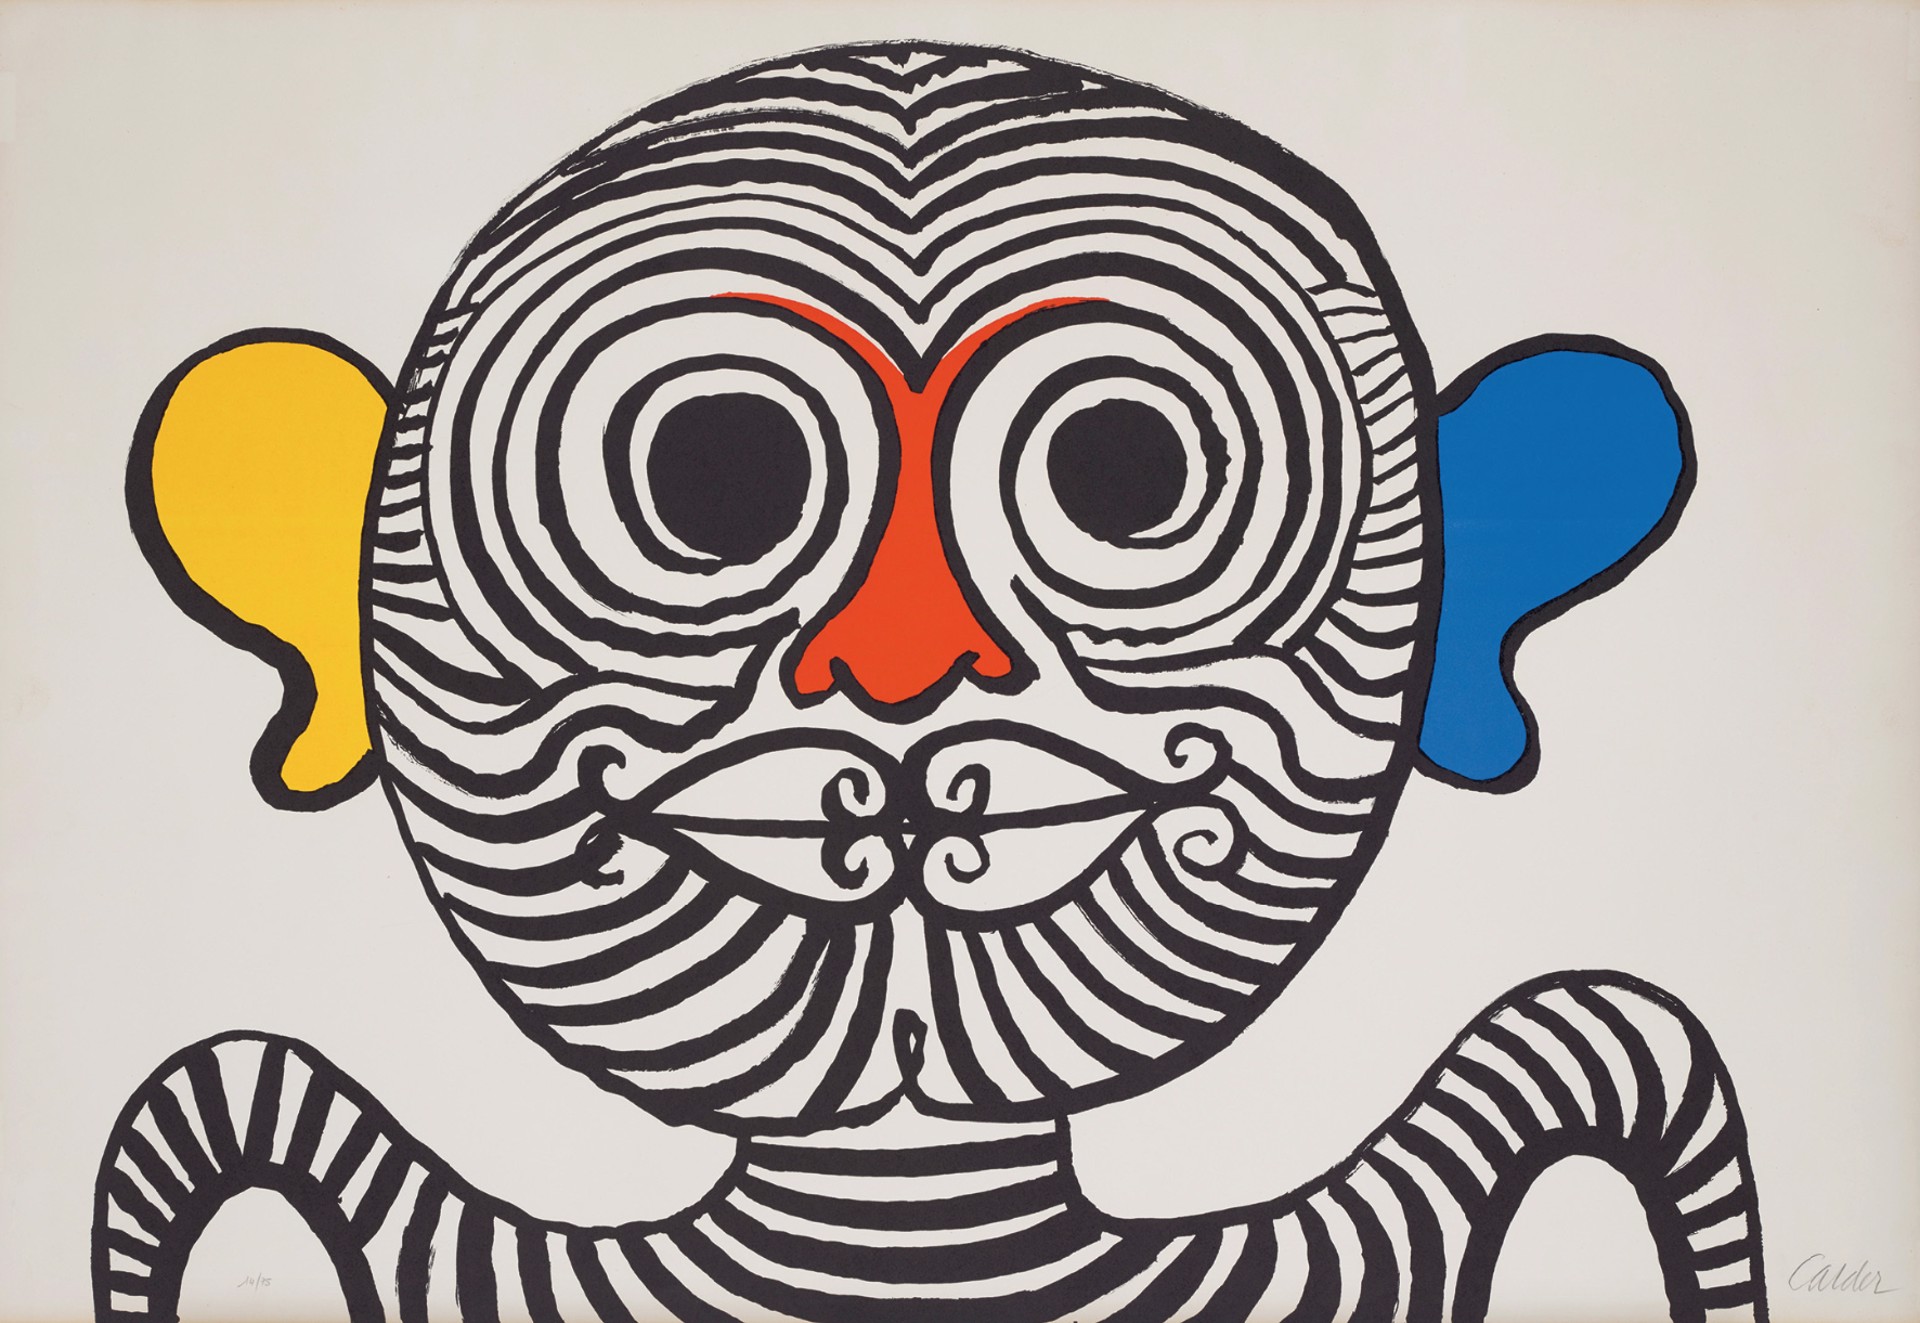 Nez et oreilles très gais (Very Gay Nose and Ears) by Alexander Calder